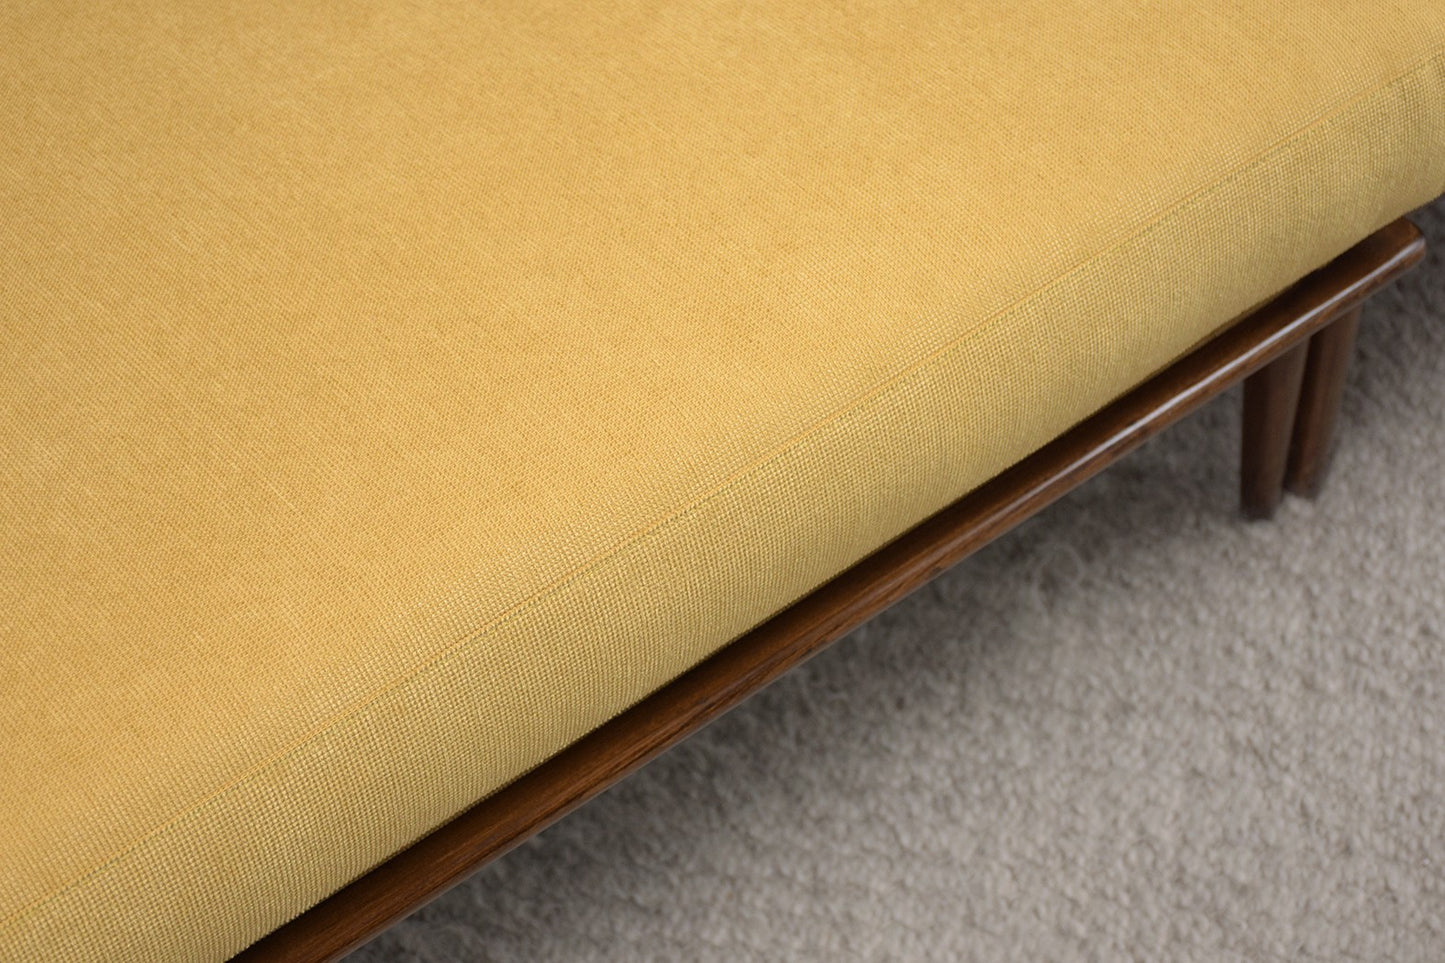 1960s Danish Sectional Sofa: Teak Craftsmanship Meets Mid-Century Elegance